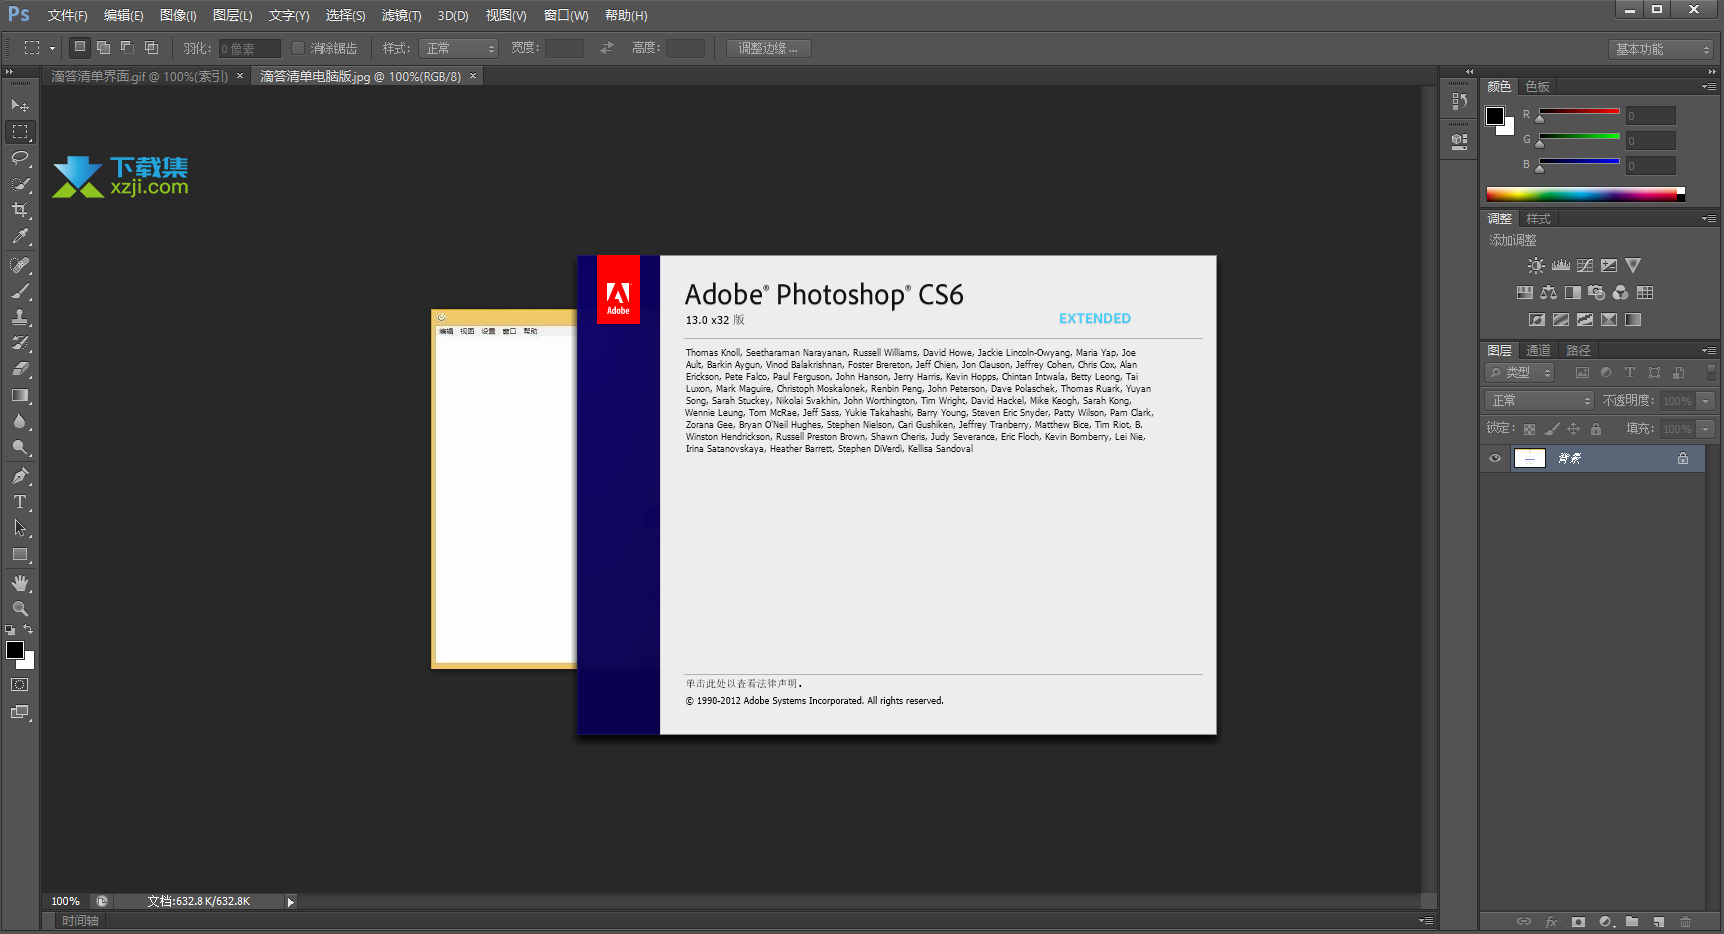 Adobe Photoshop CS6界面2